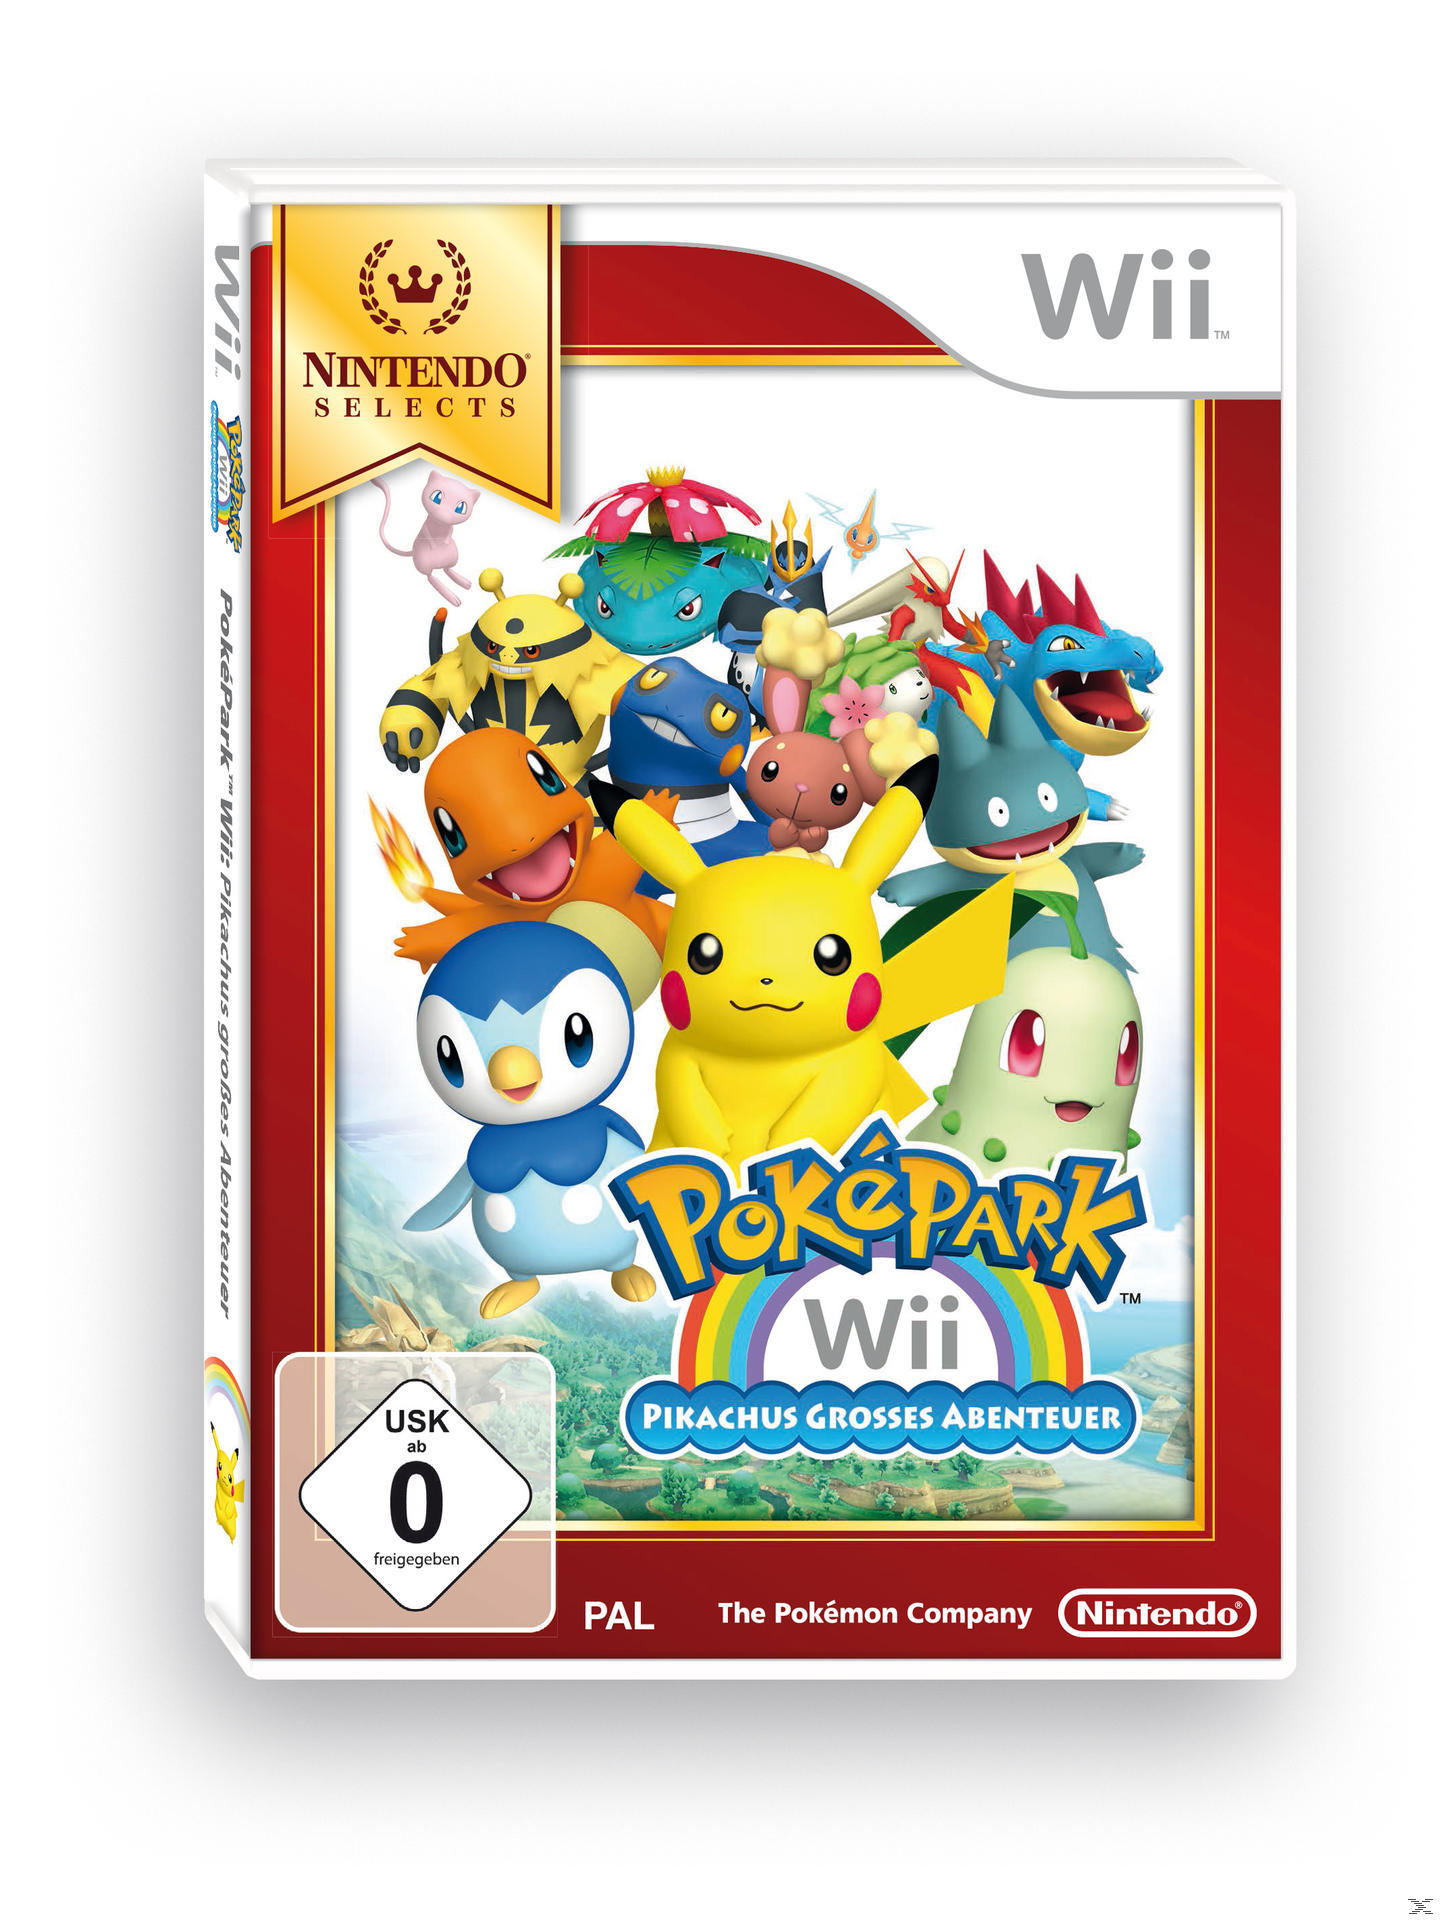 PokéPark Wii: Pikachus großes Abenteuer Selects) Wii] - [Nintendo (Nintendo